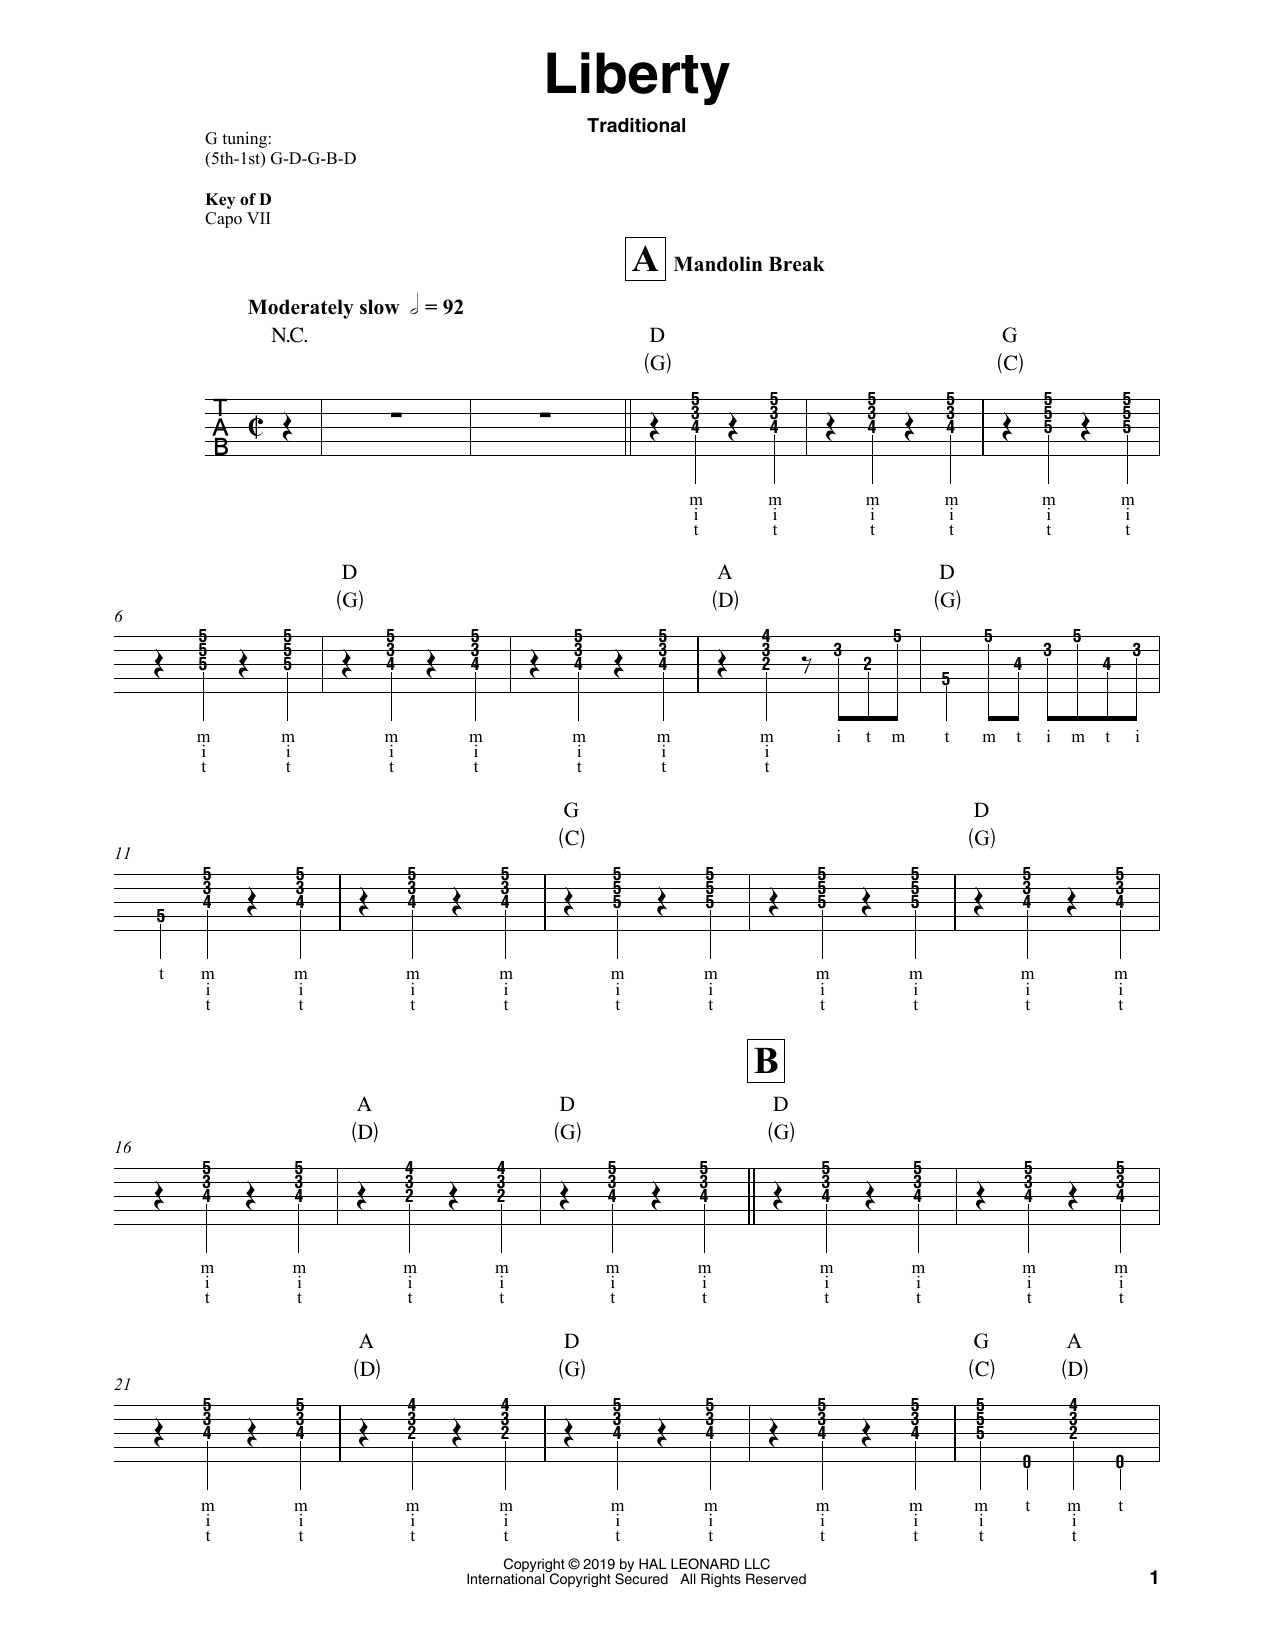 Traditional Liberty Sheet Music Notes & Chords for Banjo Tab - Download or Print PDF